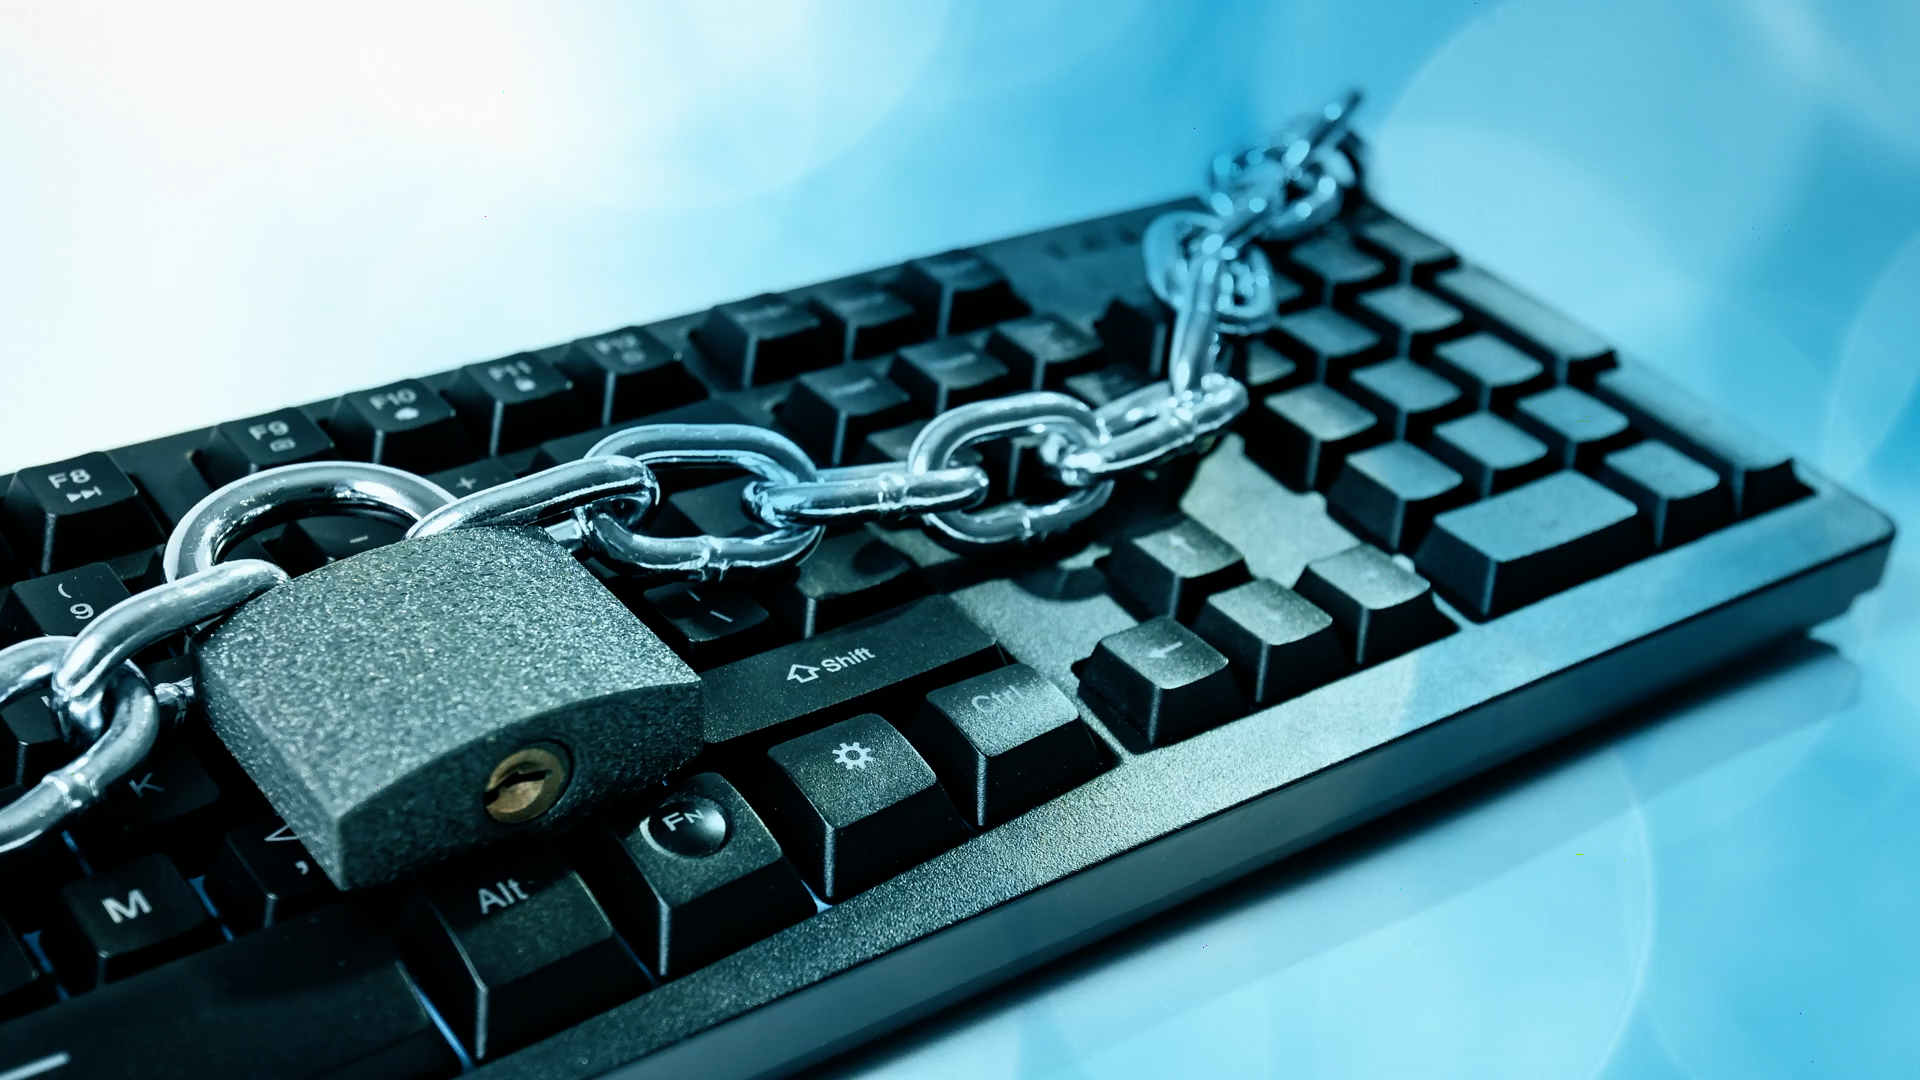 locked keyboard - source: LinksMedia